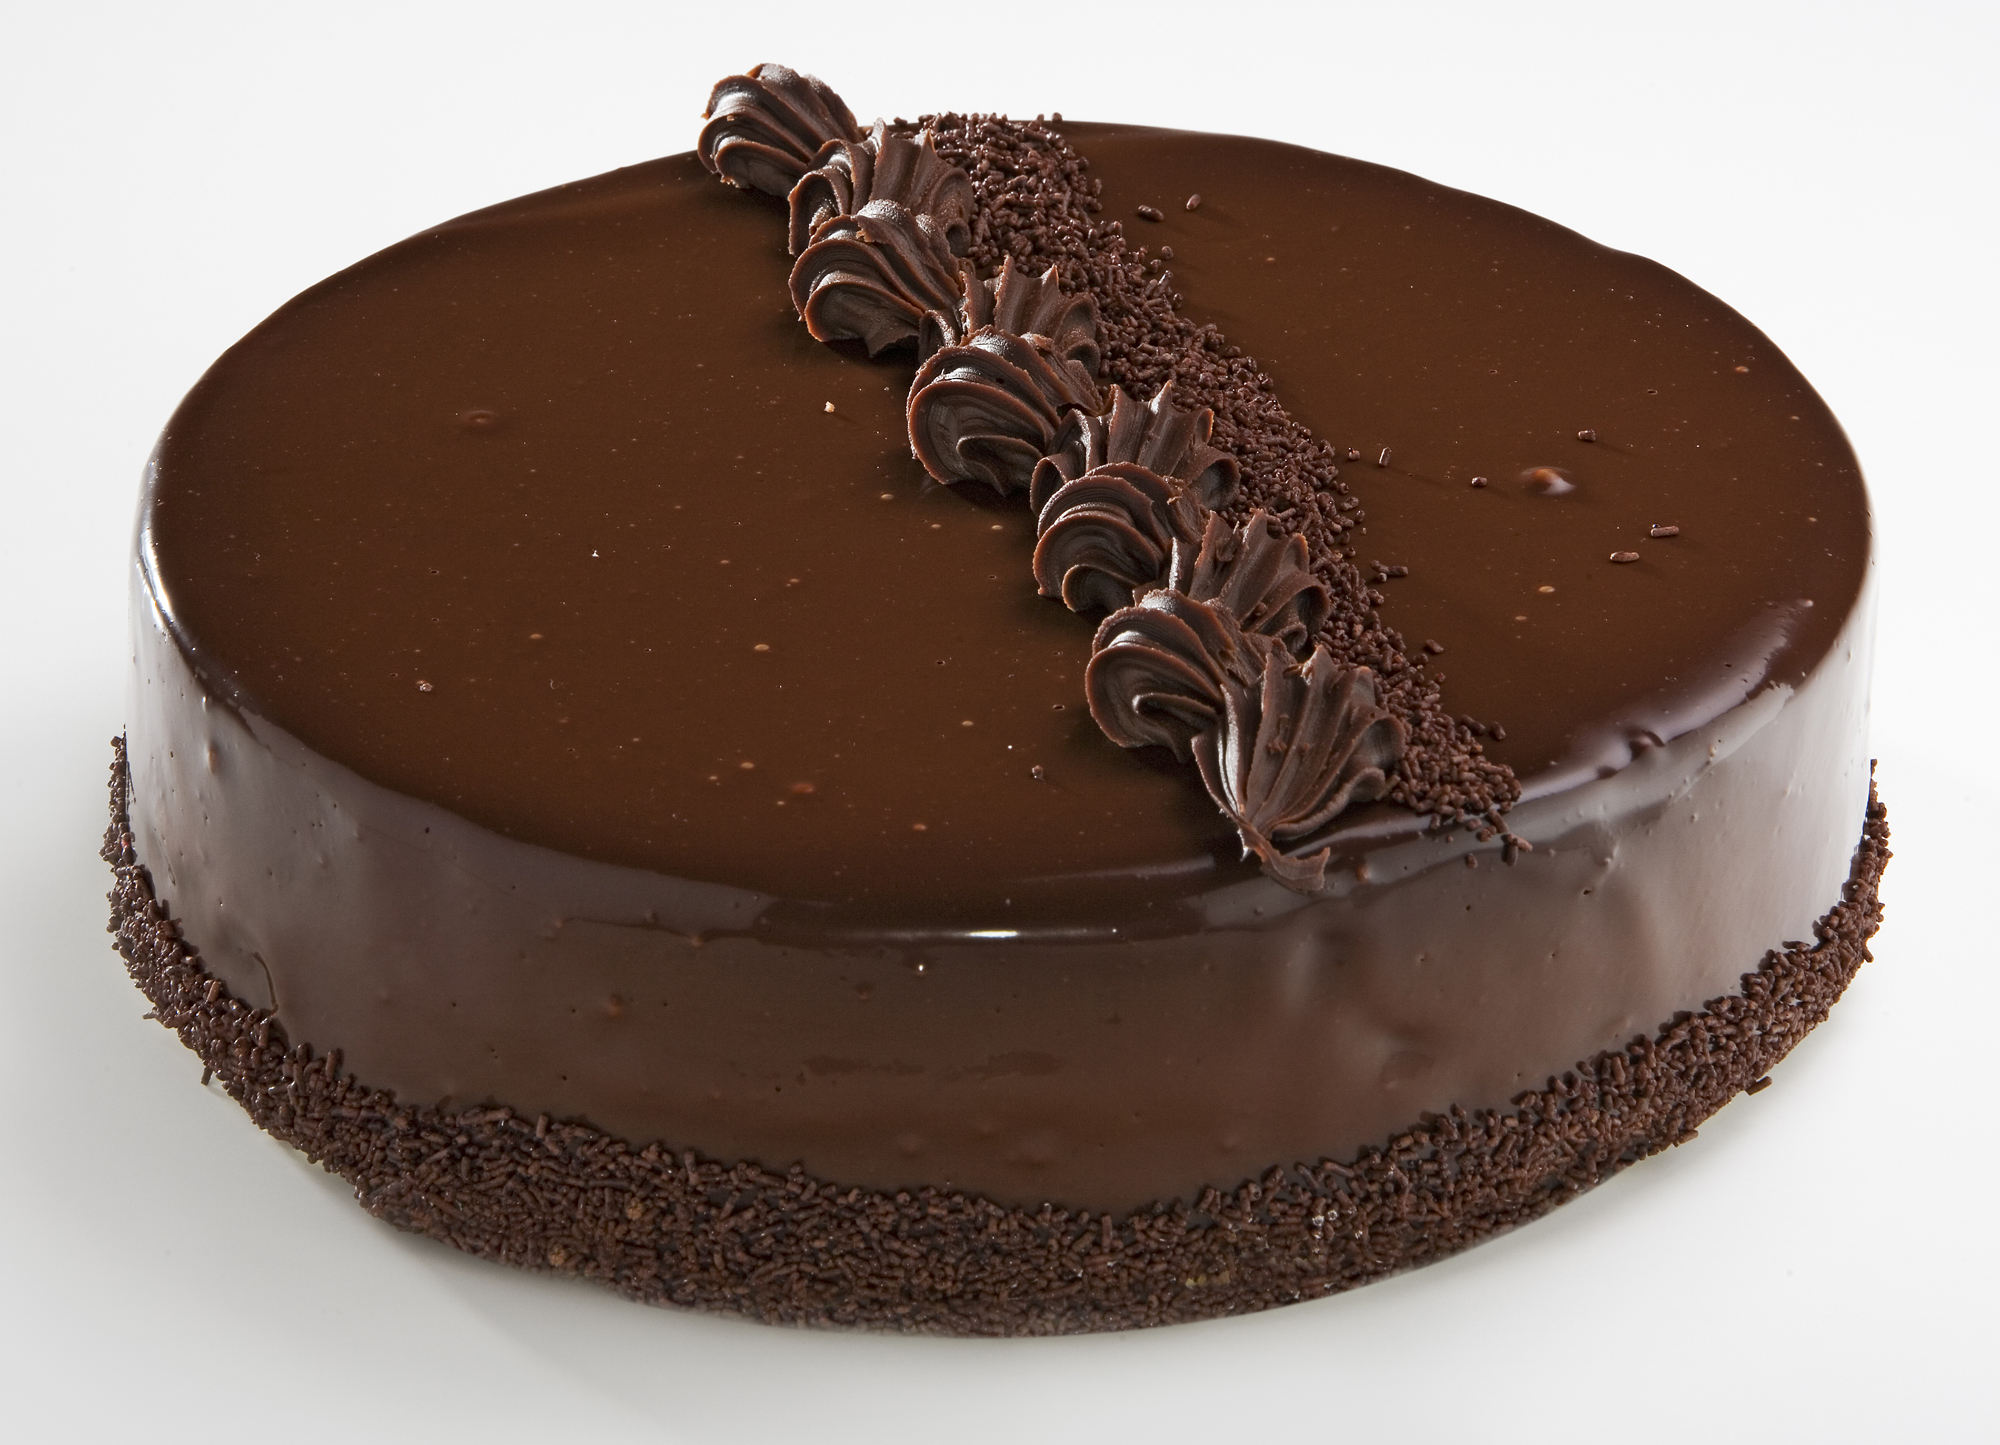 Chocolate-chocolate-30423745-2000-1445.j